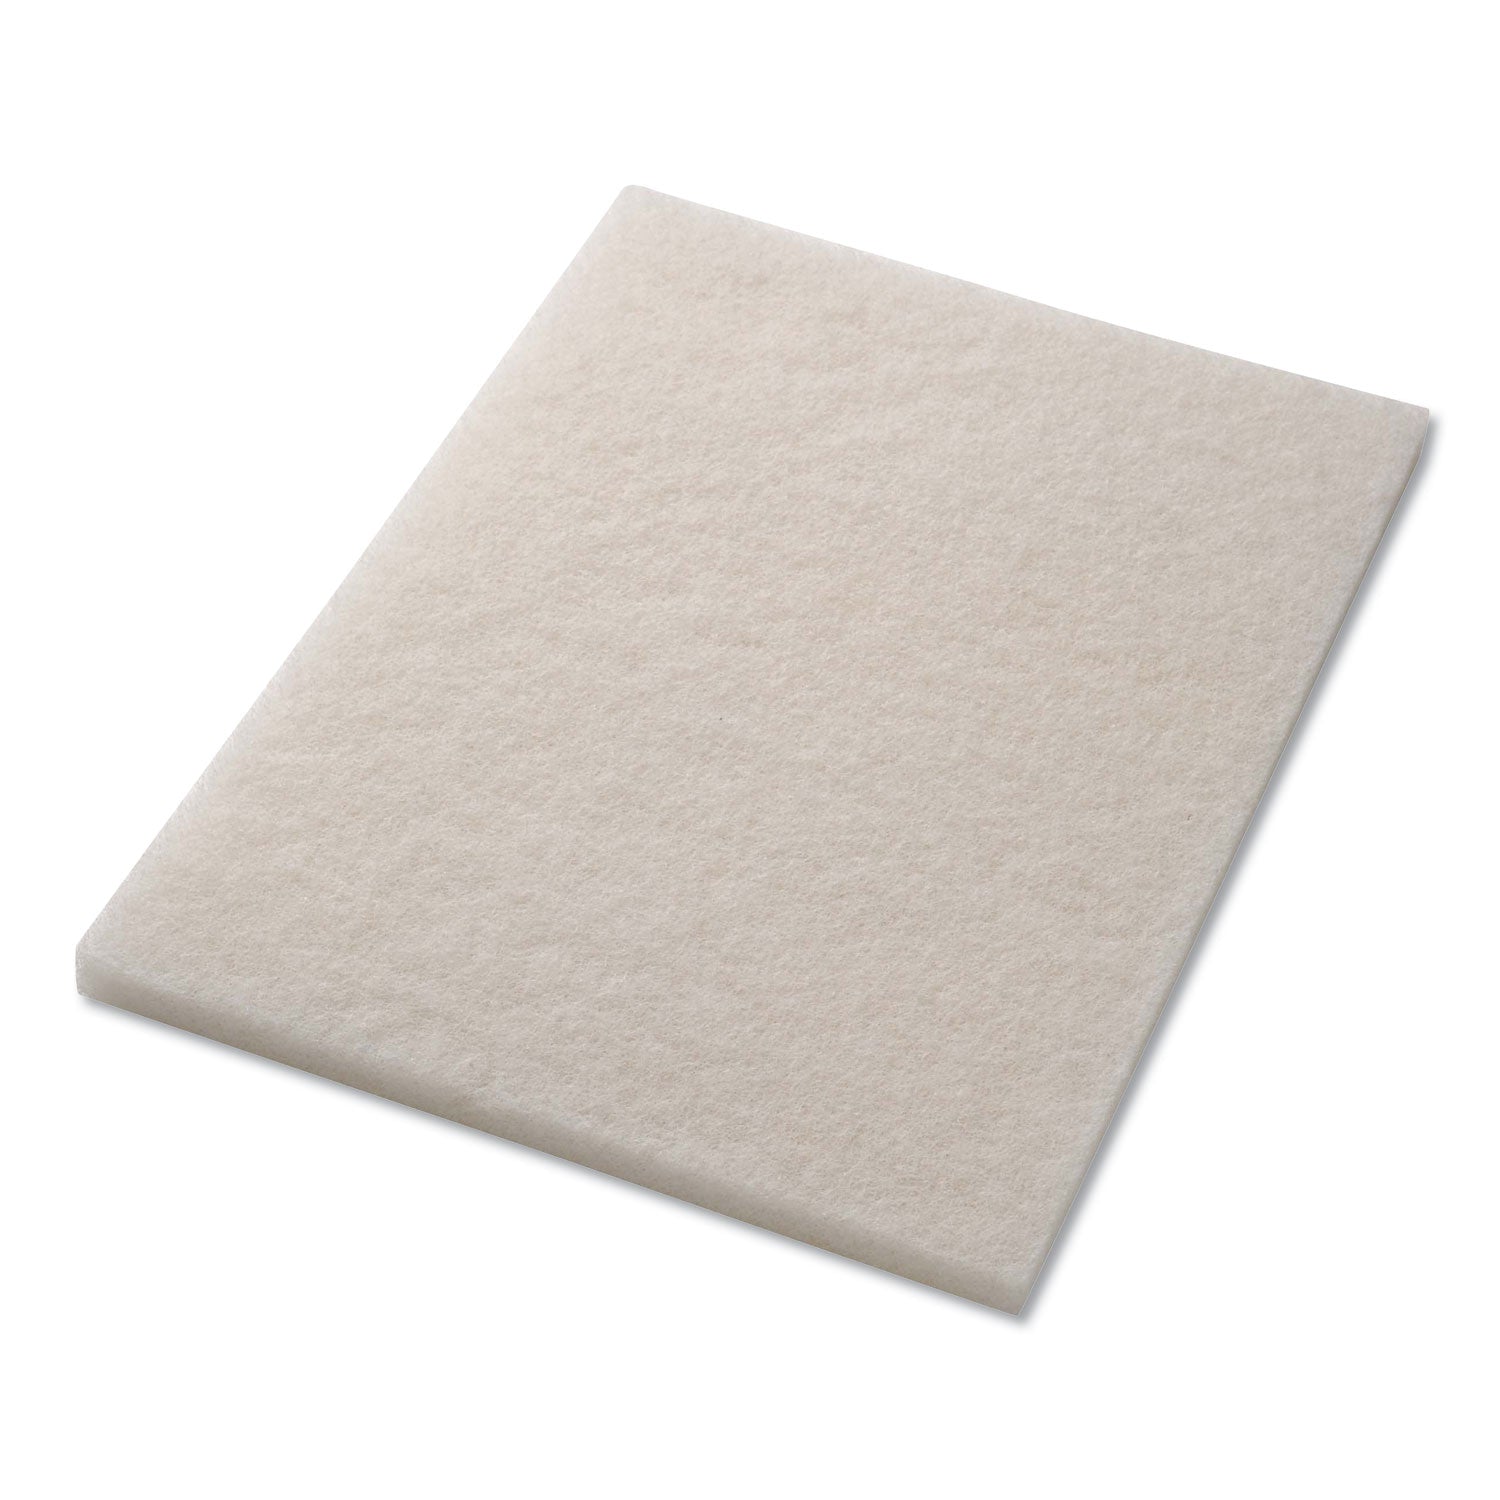 polishing-pads-14-x-20-white-5-carton_amf40121420 - 1